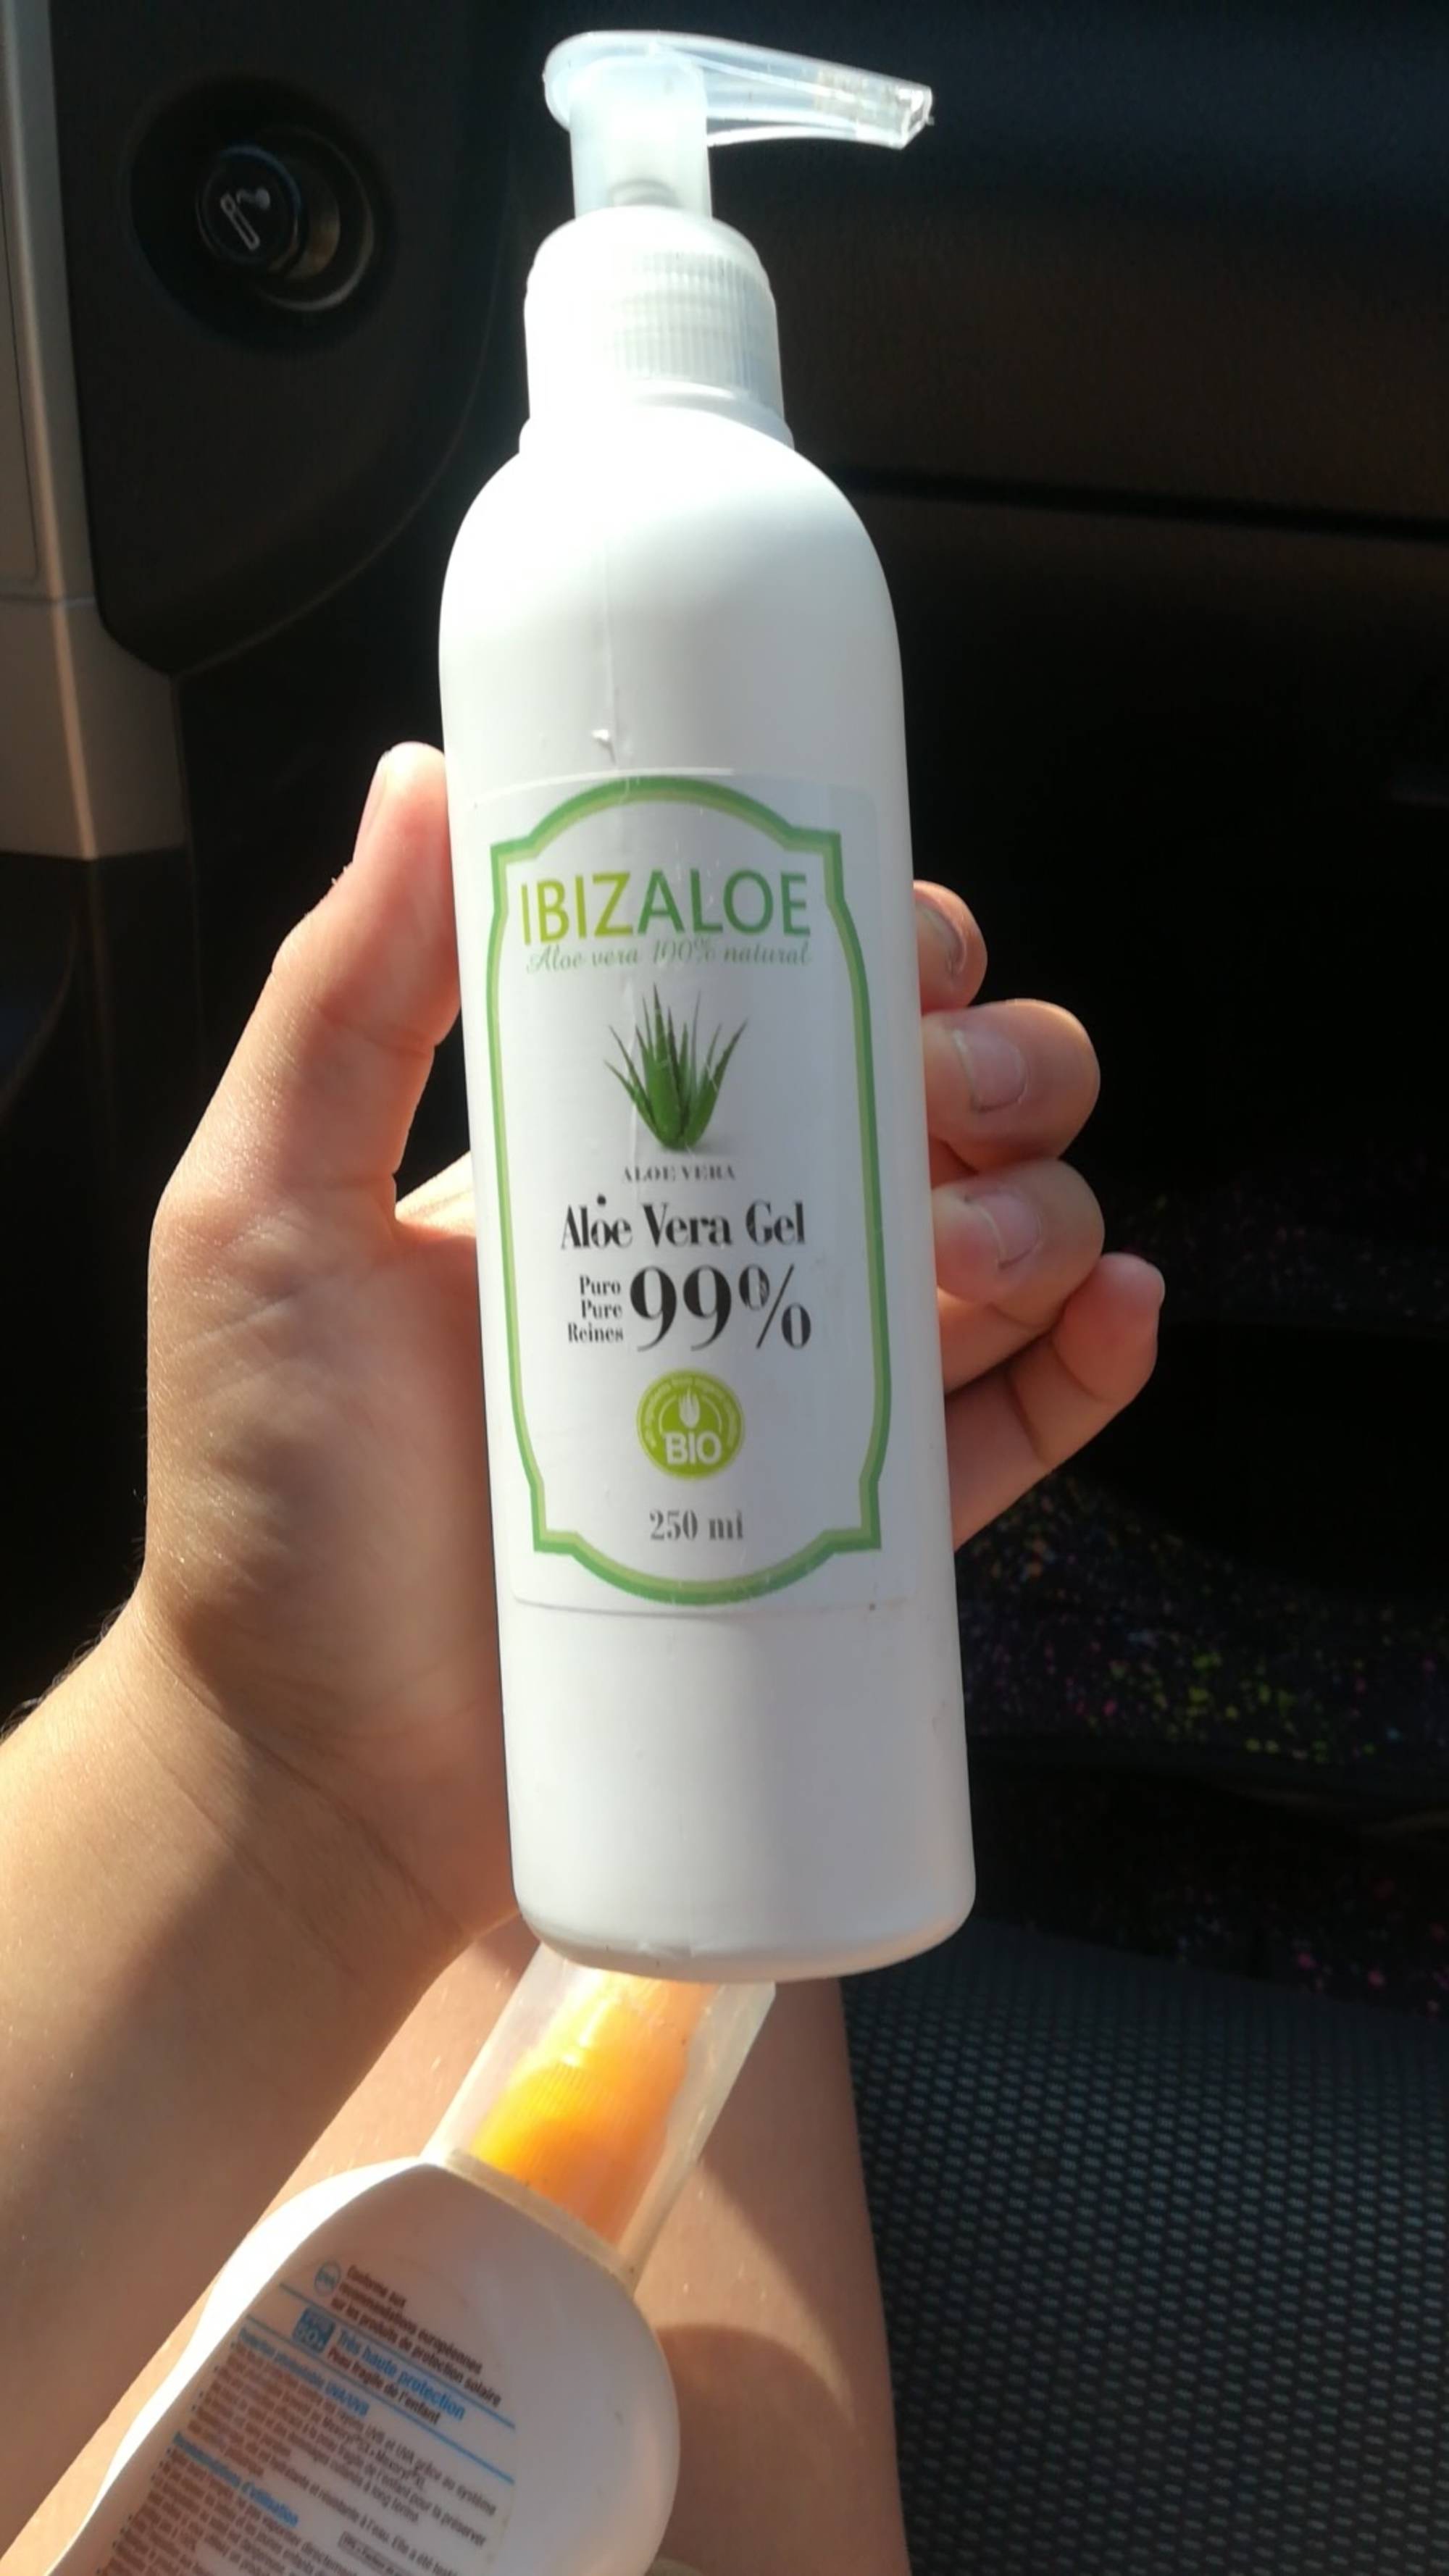 IBIZALOE - Aloe vera gel pure 99%